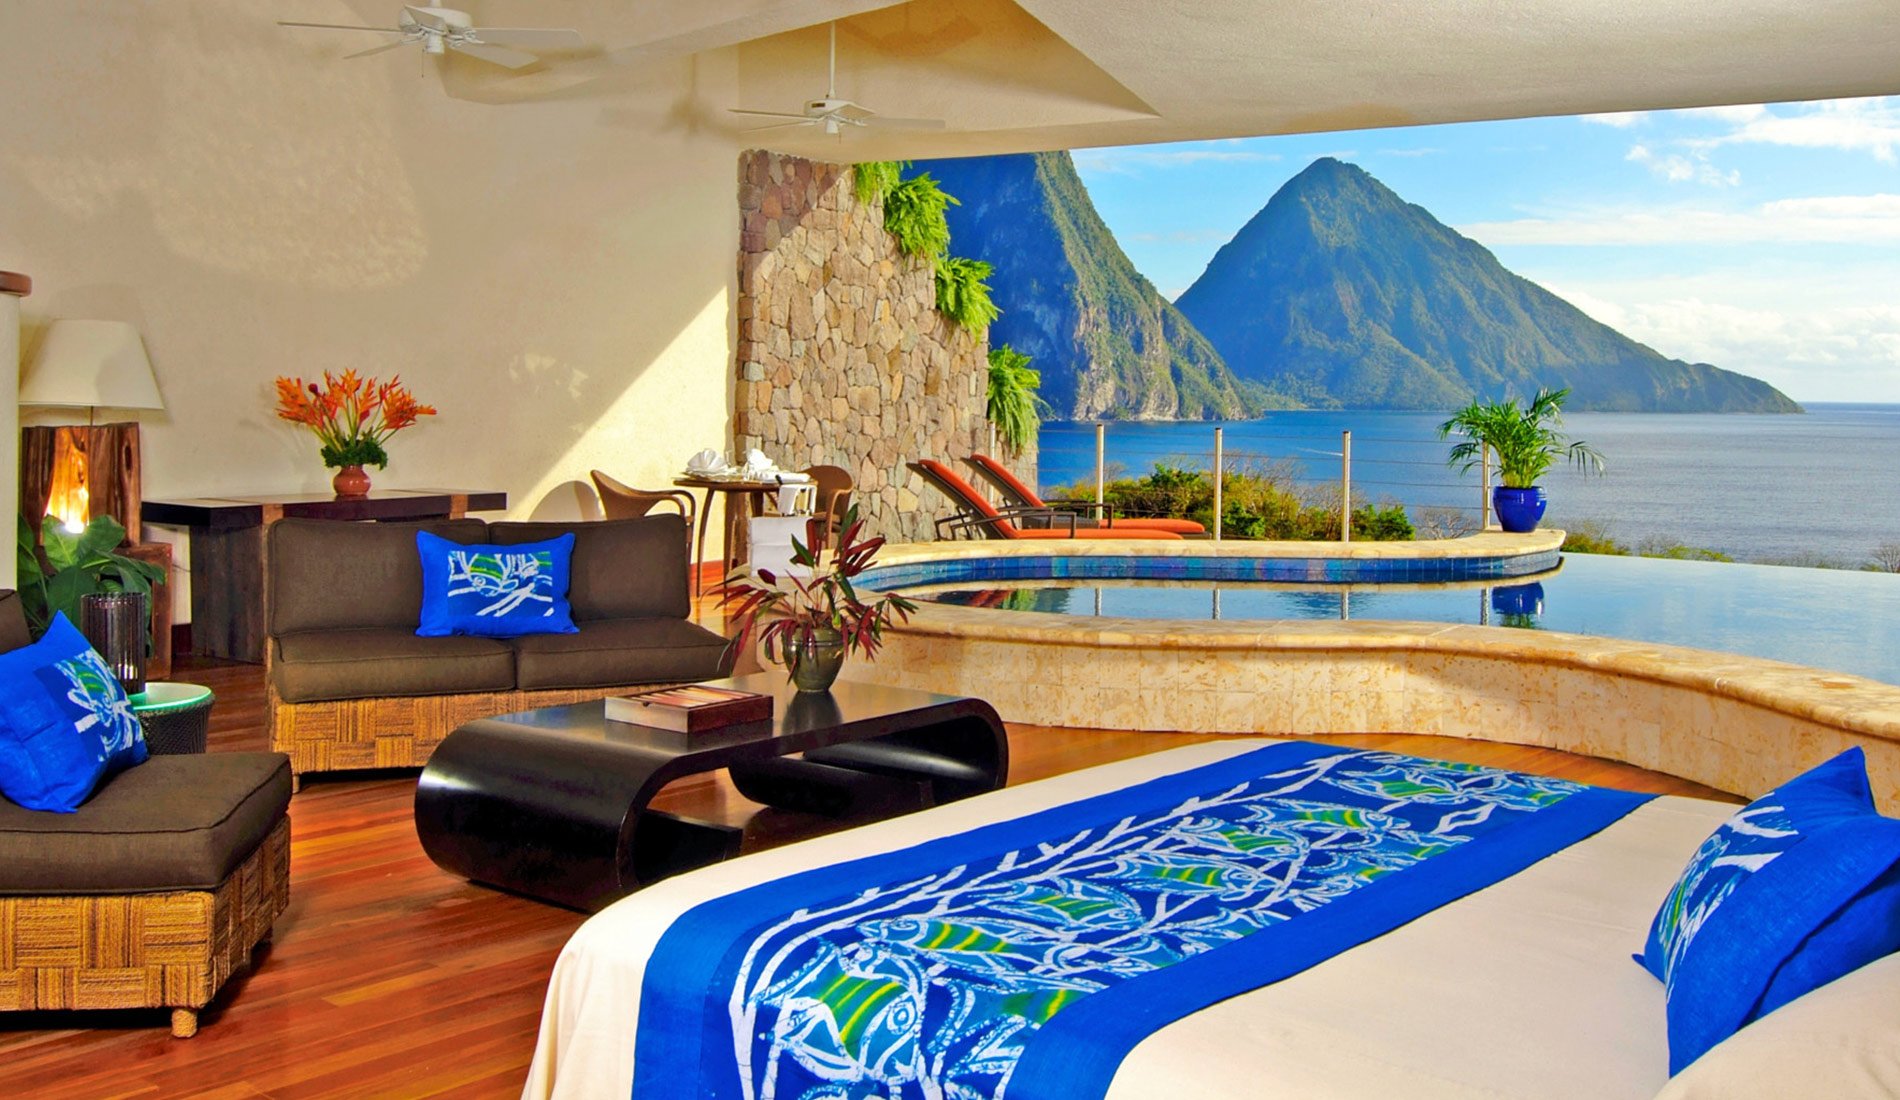 Luxury Hotel Jade Mountain resort 5 stars St Lucia caribbean island bedroom